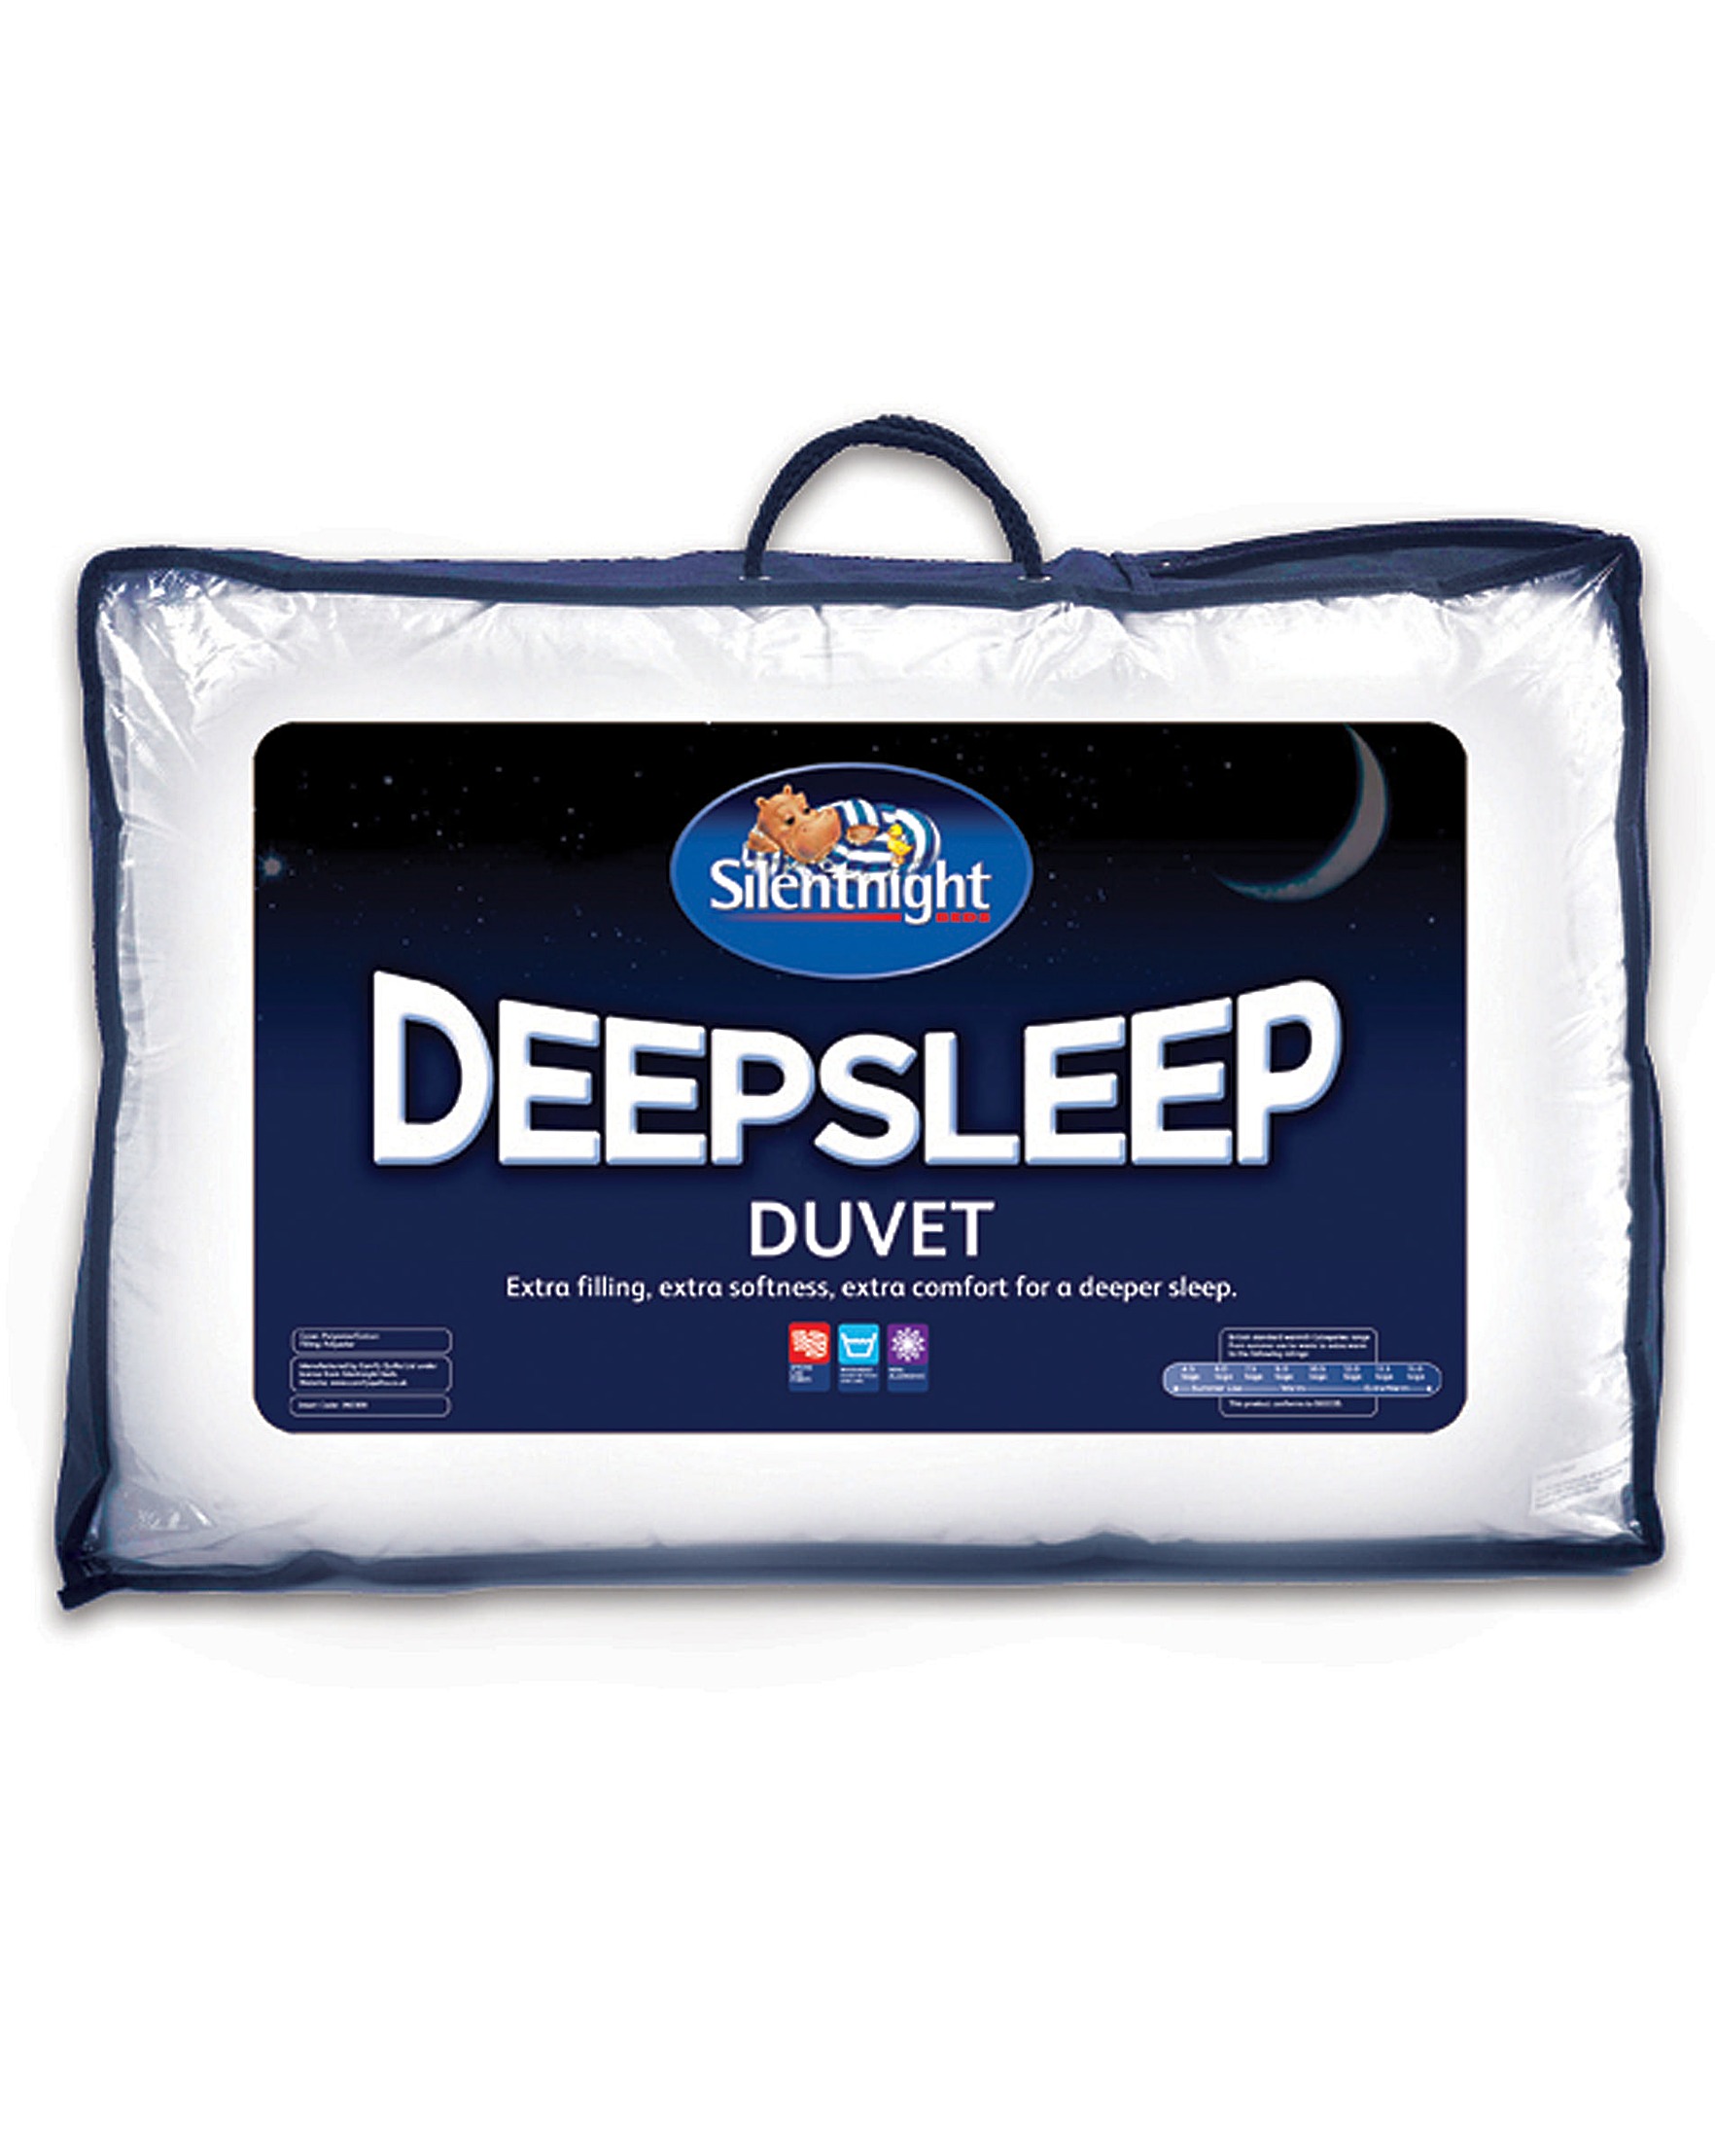 Silentnight Deepsleep Duvet 7 5 Tog J D Williams